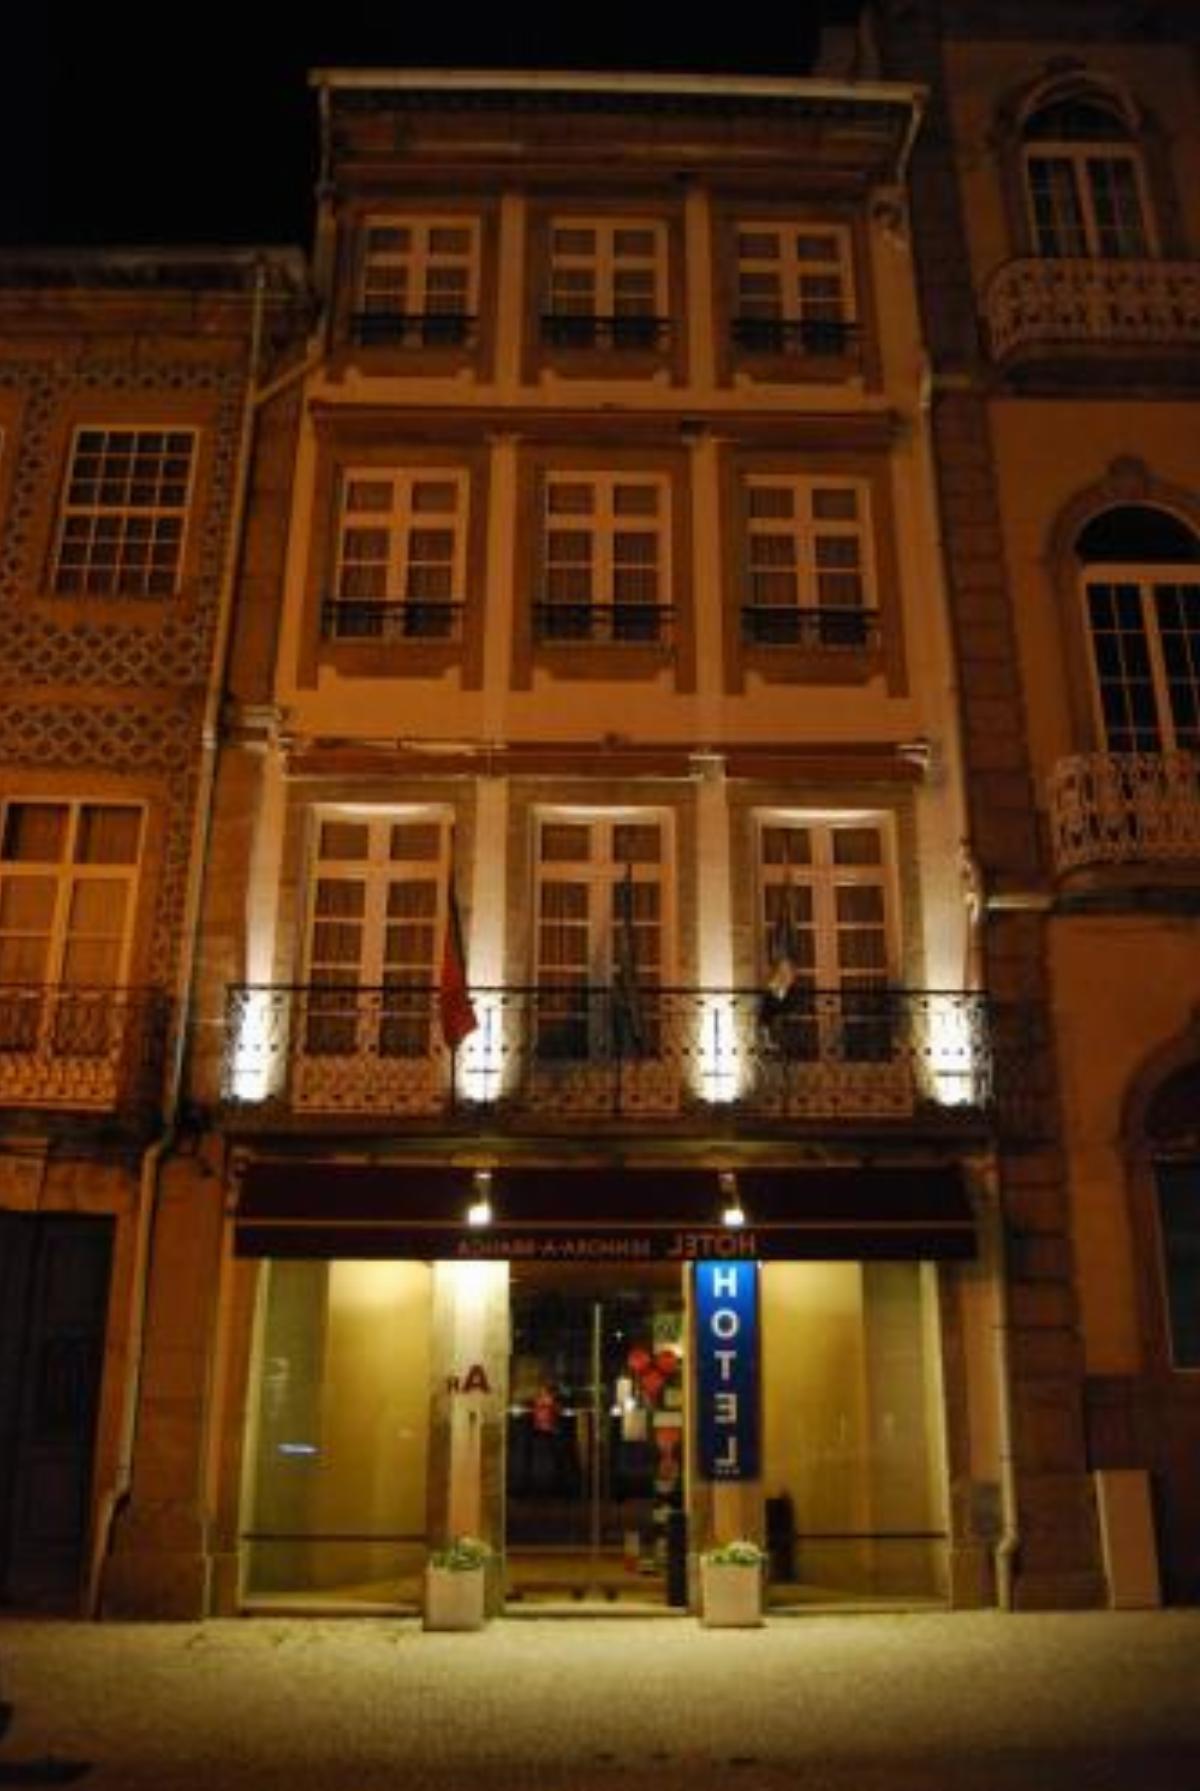 Hotel Senhora A Branca Hotel Braga Portugal